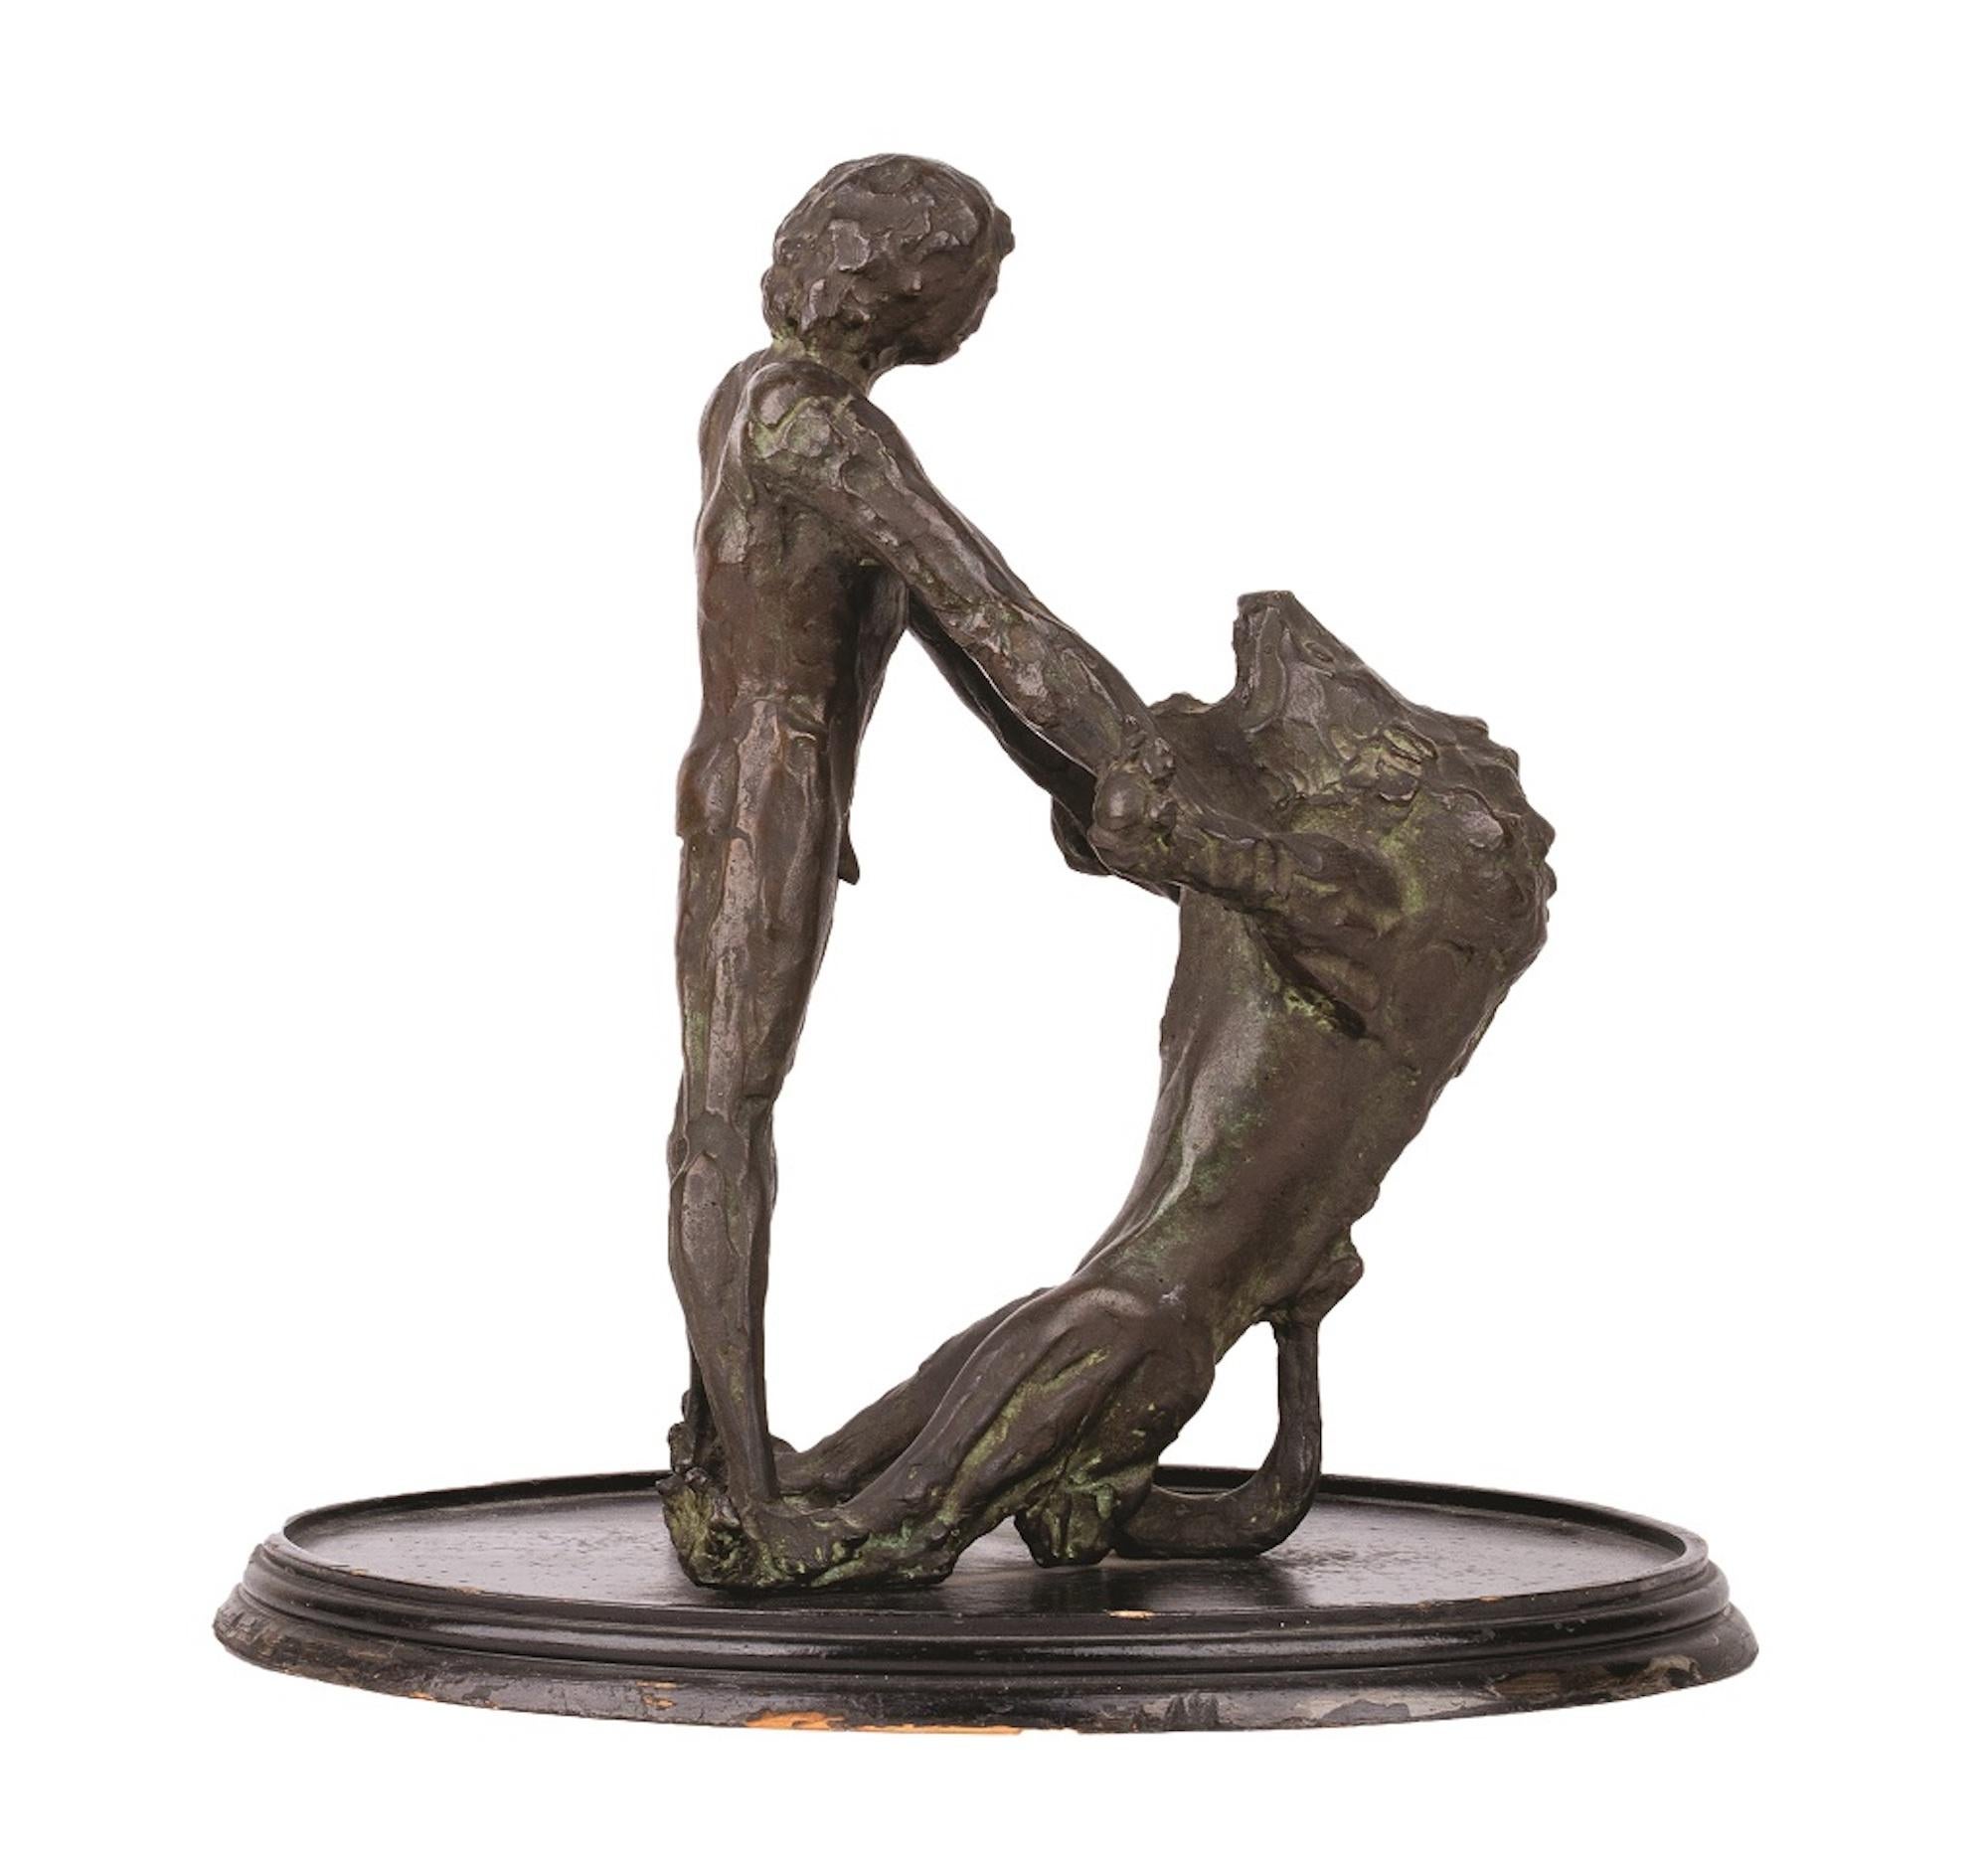 African Victory - Original Bronze Sculpture by Arturo Martini - 1936/37 1